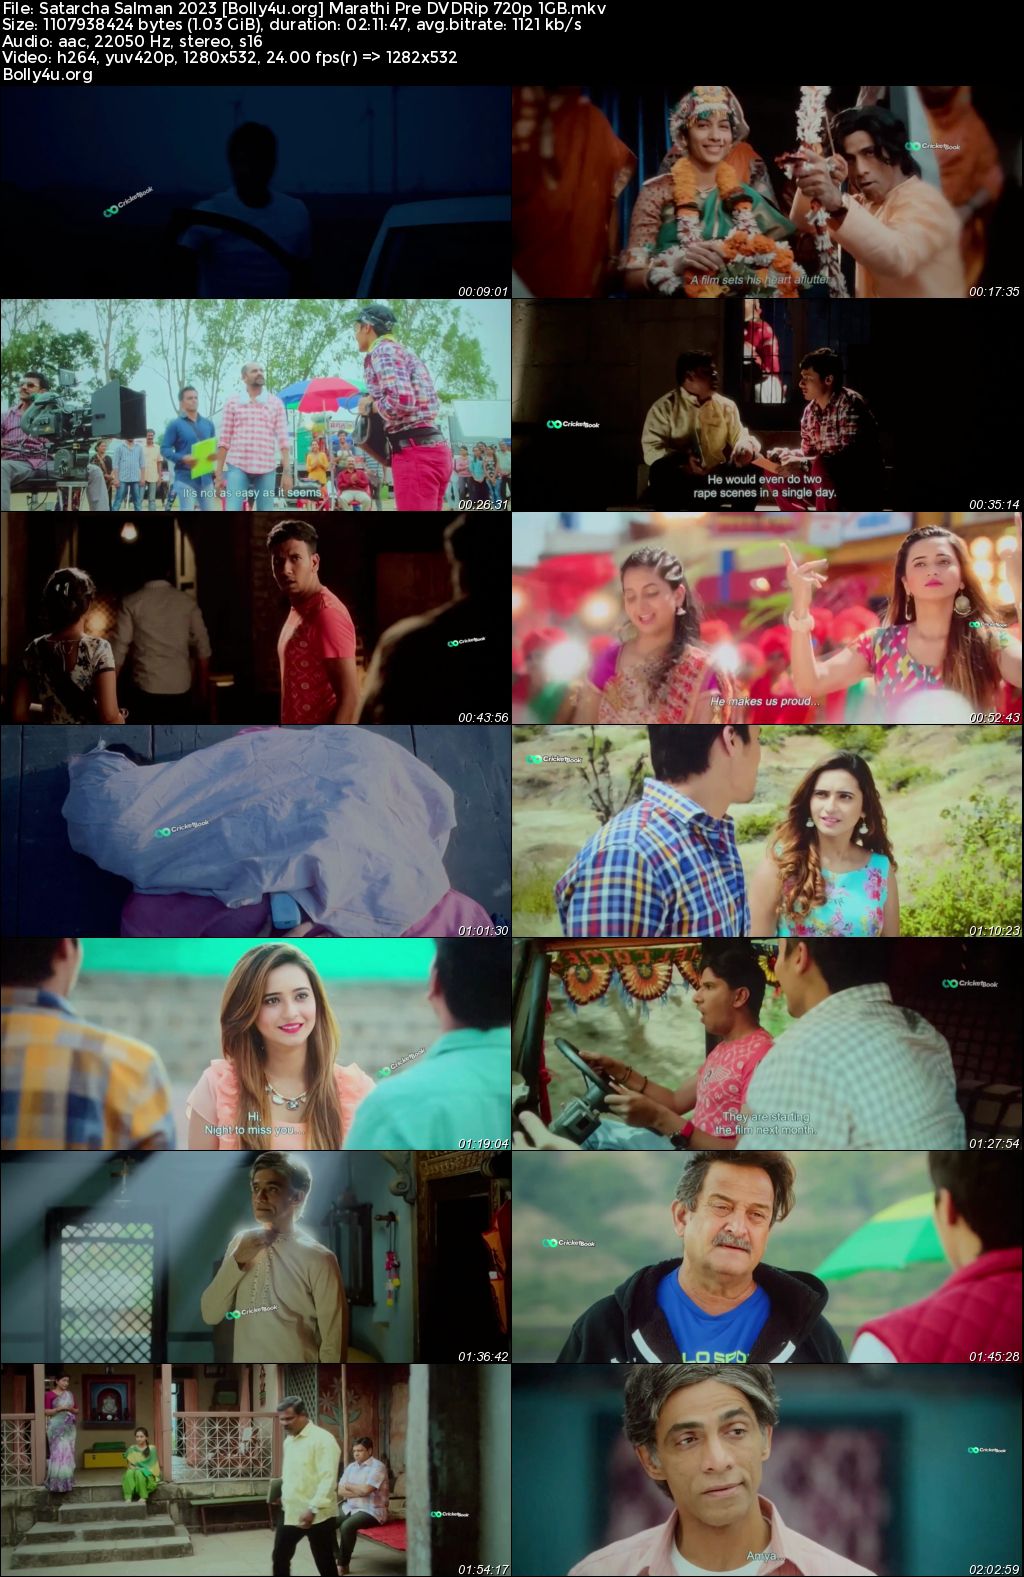 Satarcha Salman 2023 Pre DVDRip Marathi Full Movie Download 720p 480p